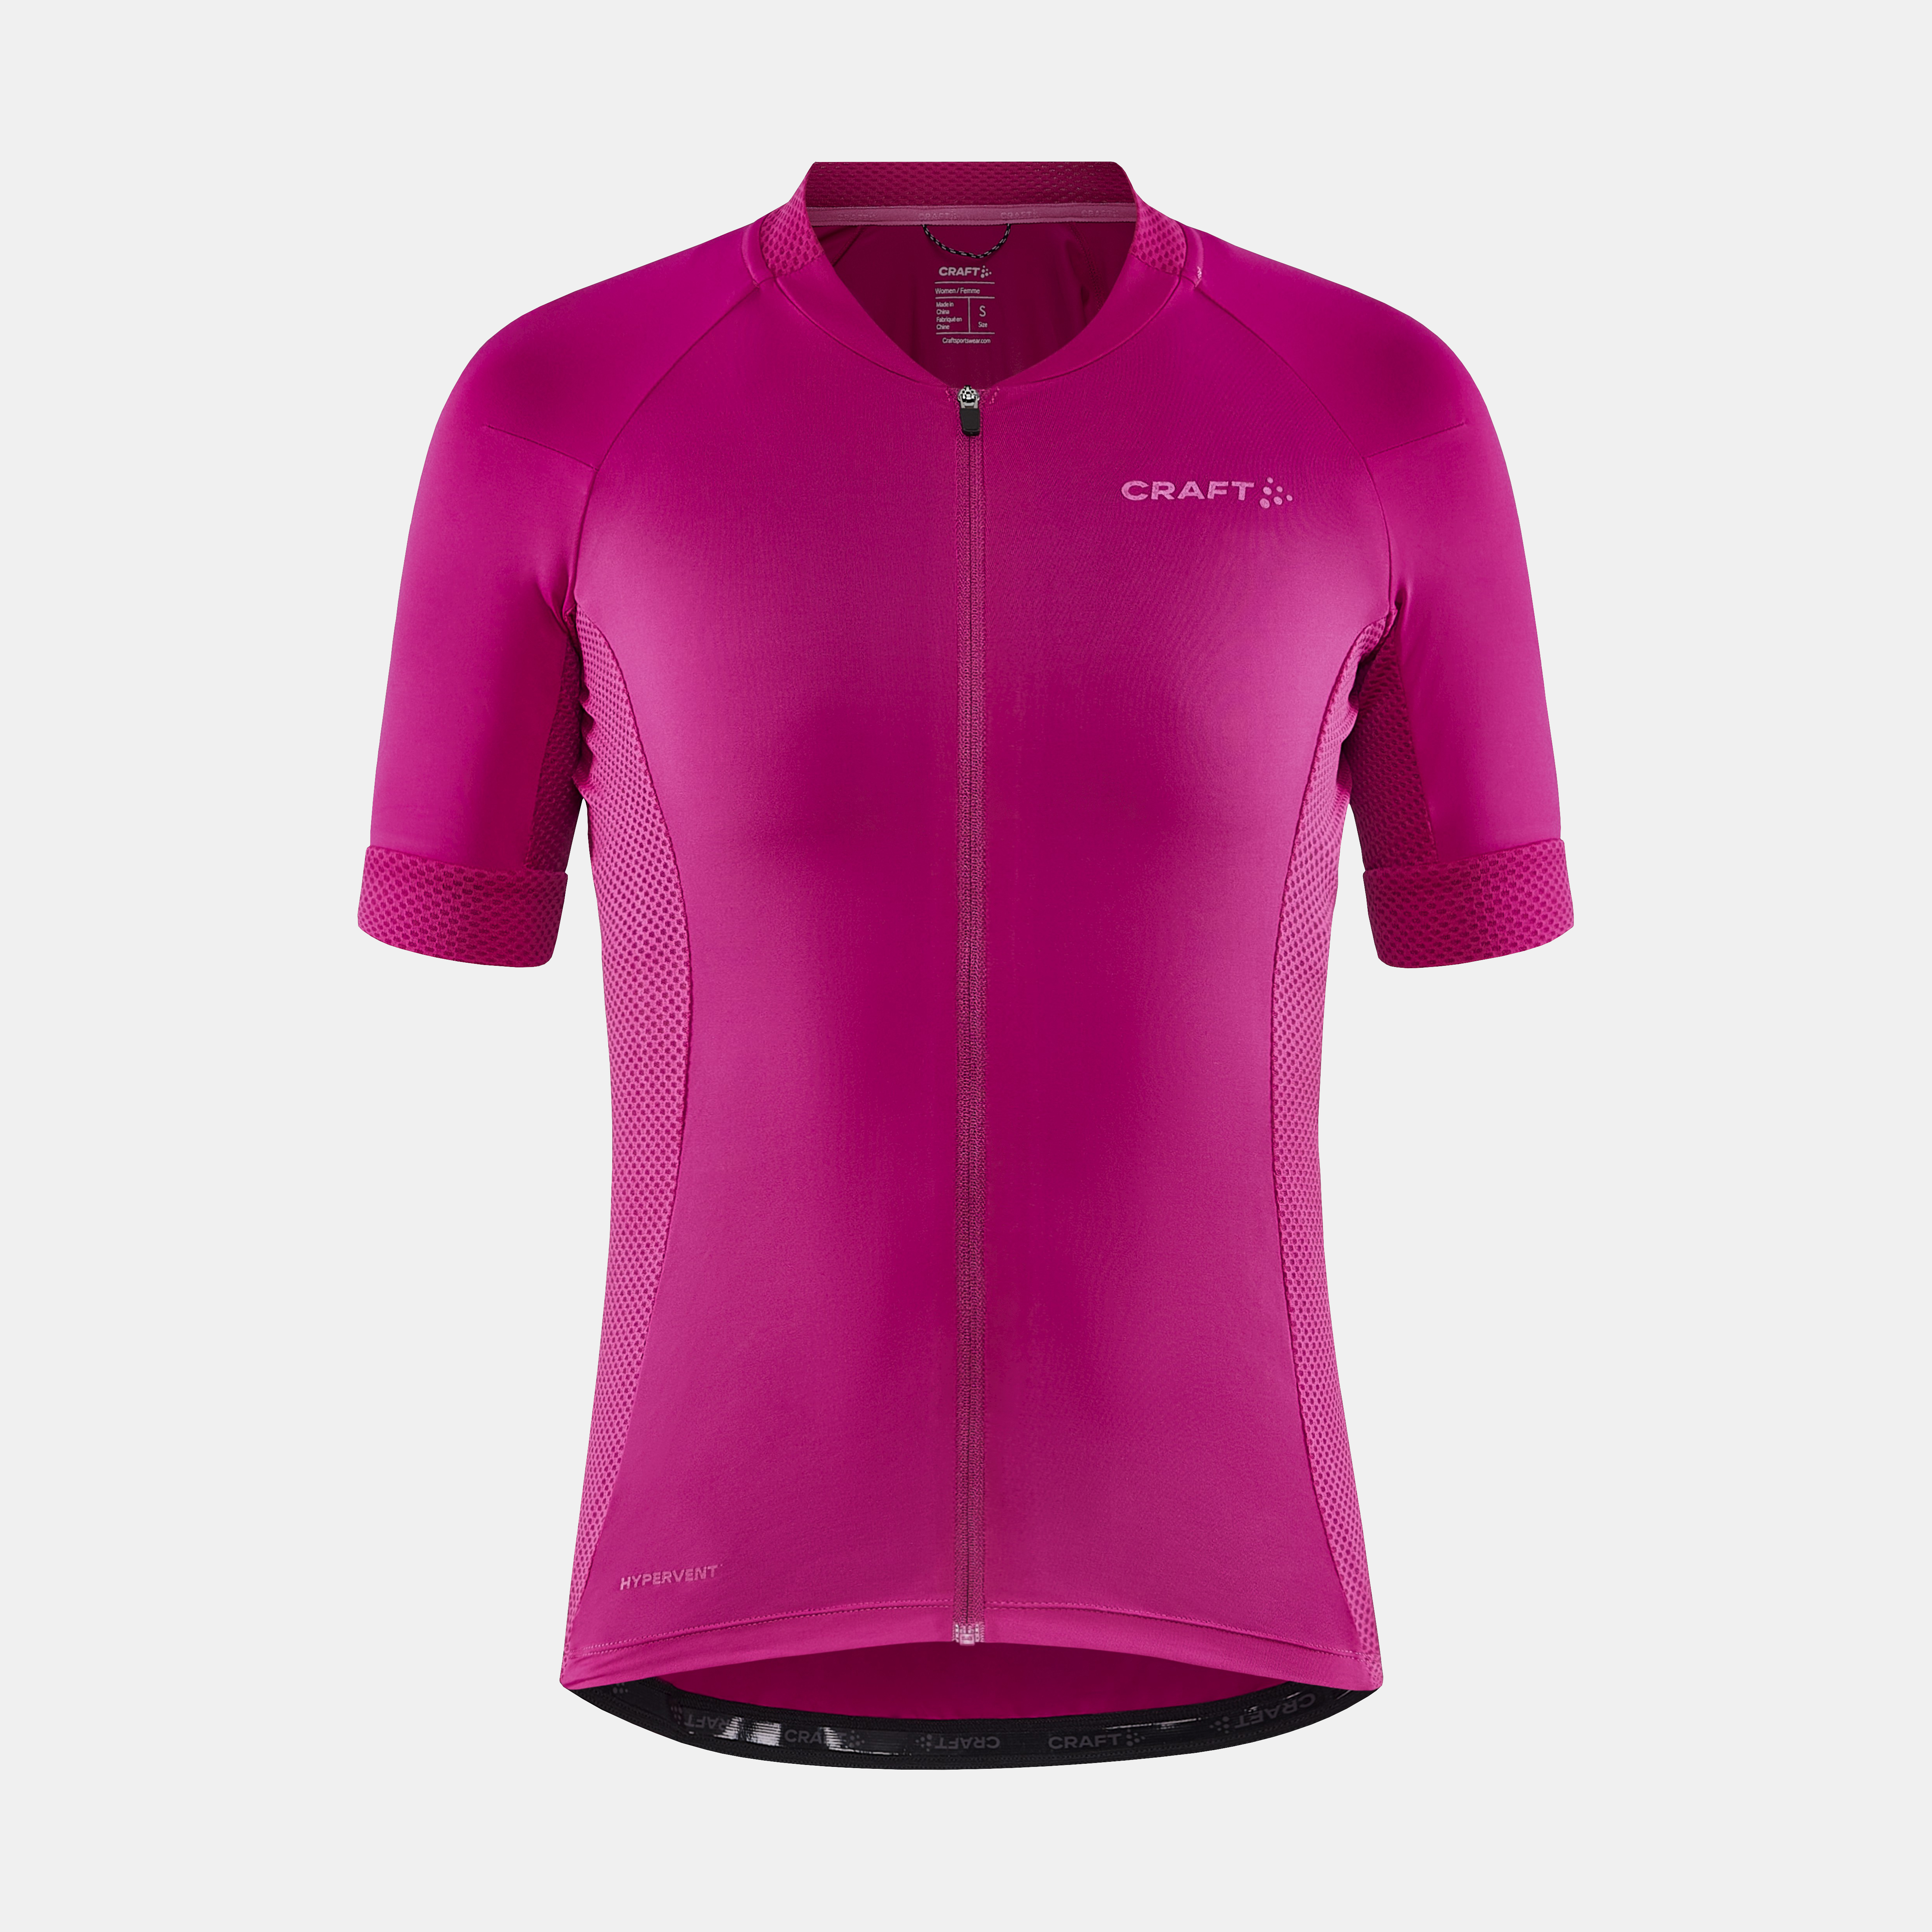 Jersey - Adv Craft Endurance Pink | W Sportswear